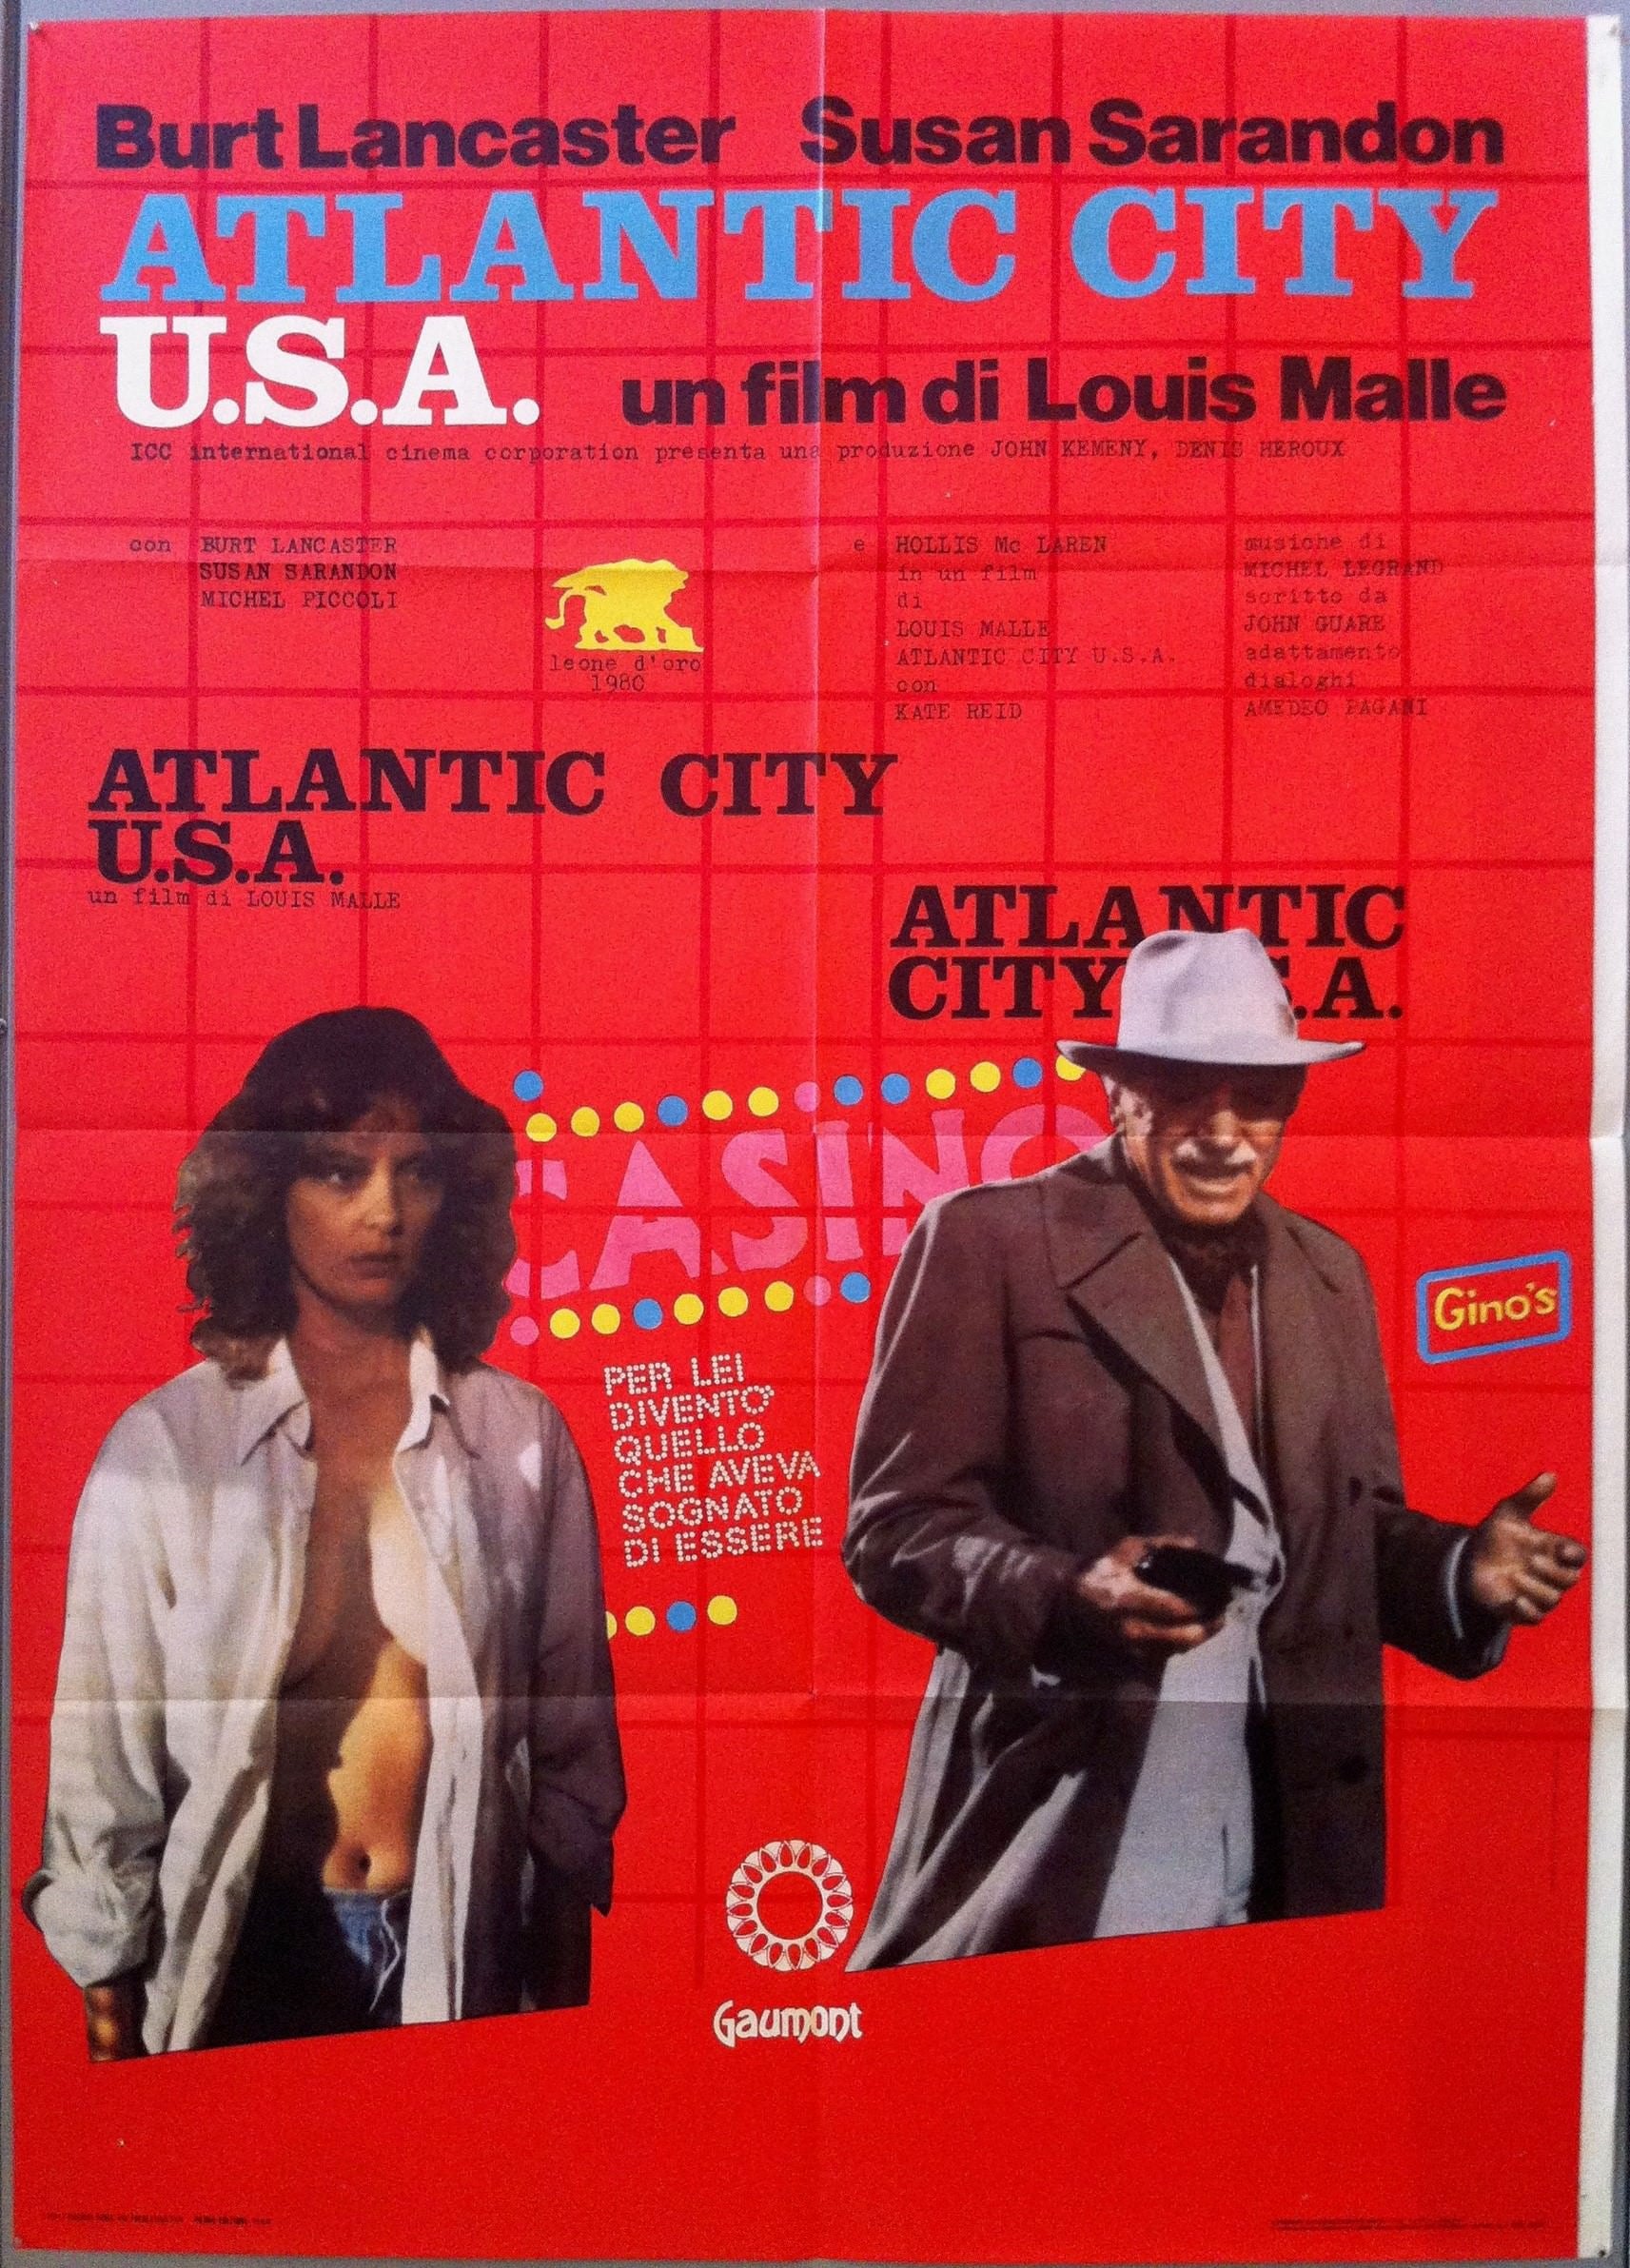 Atlantic City, film by Malle [1980]